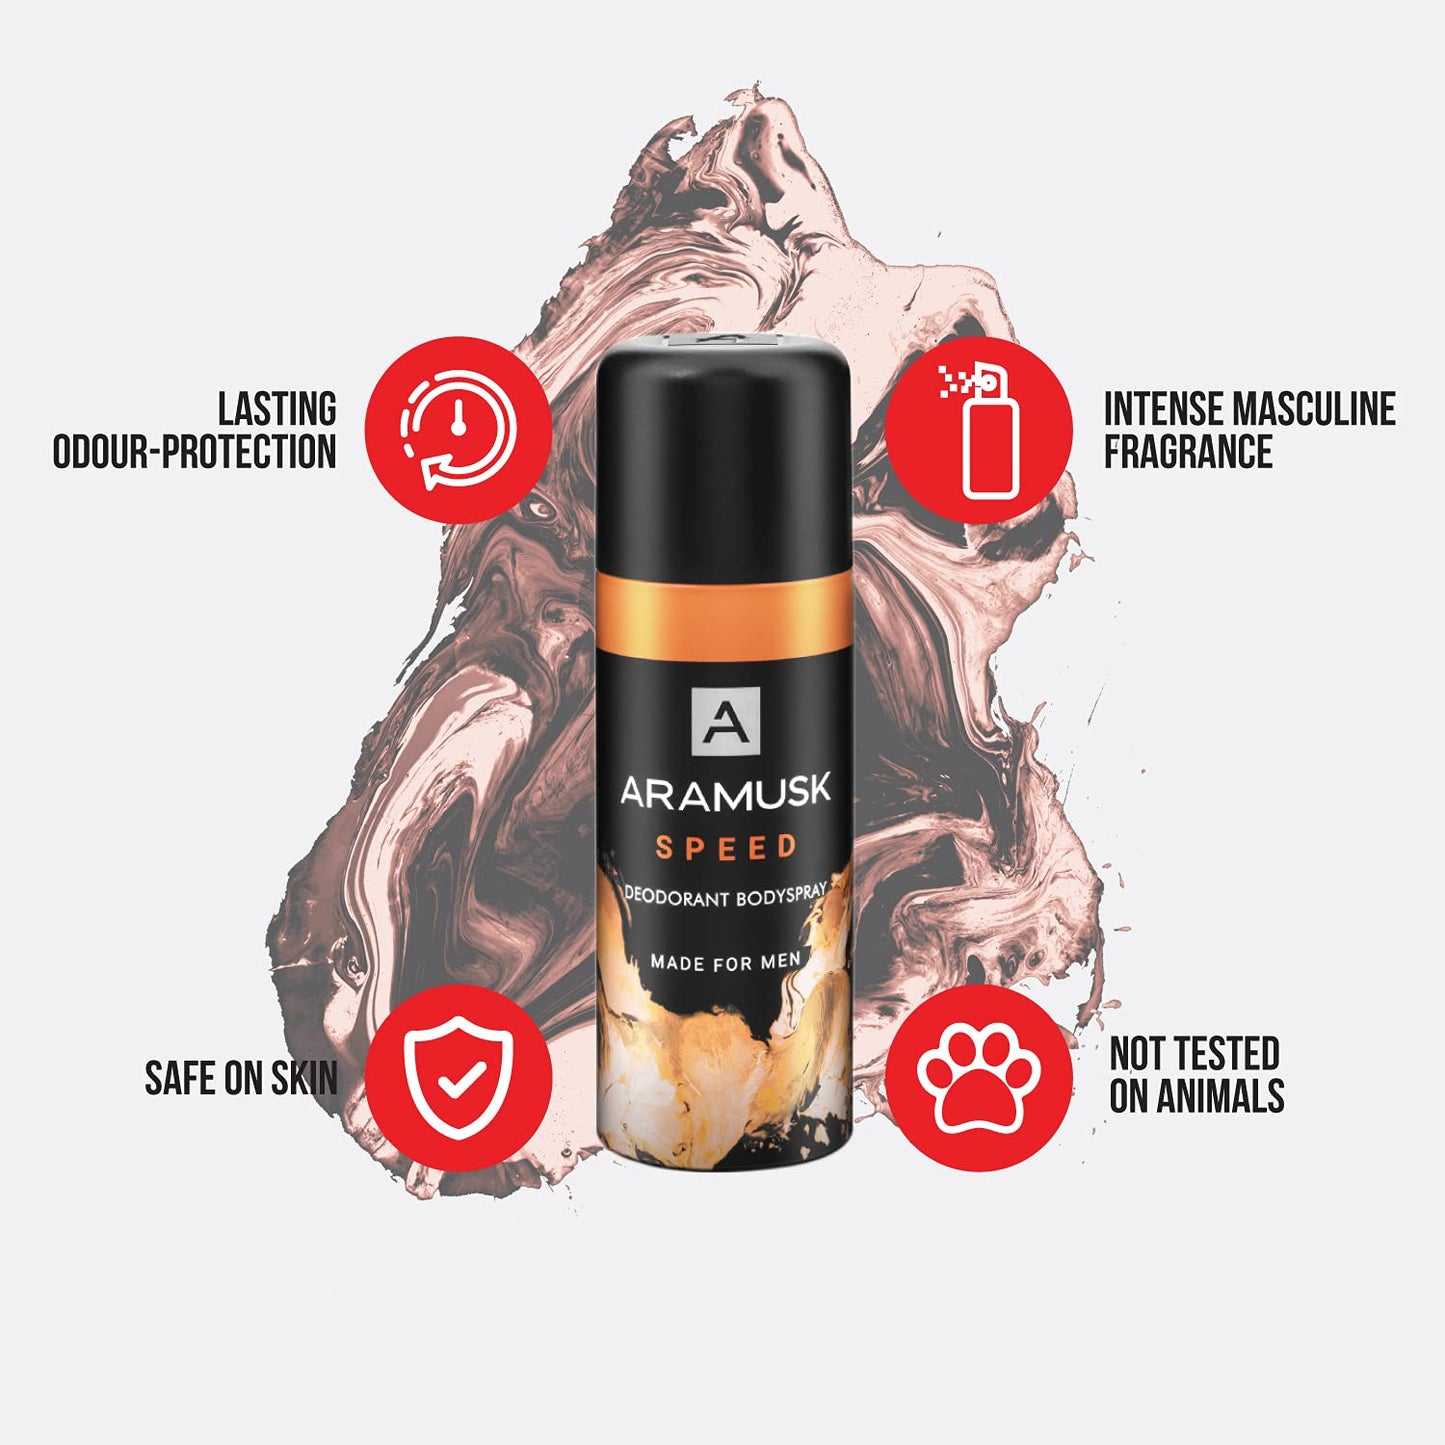 Aramusk Men Speed Deodorant Body Spray 150ml